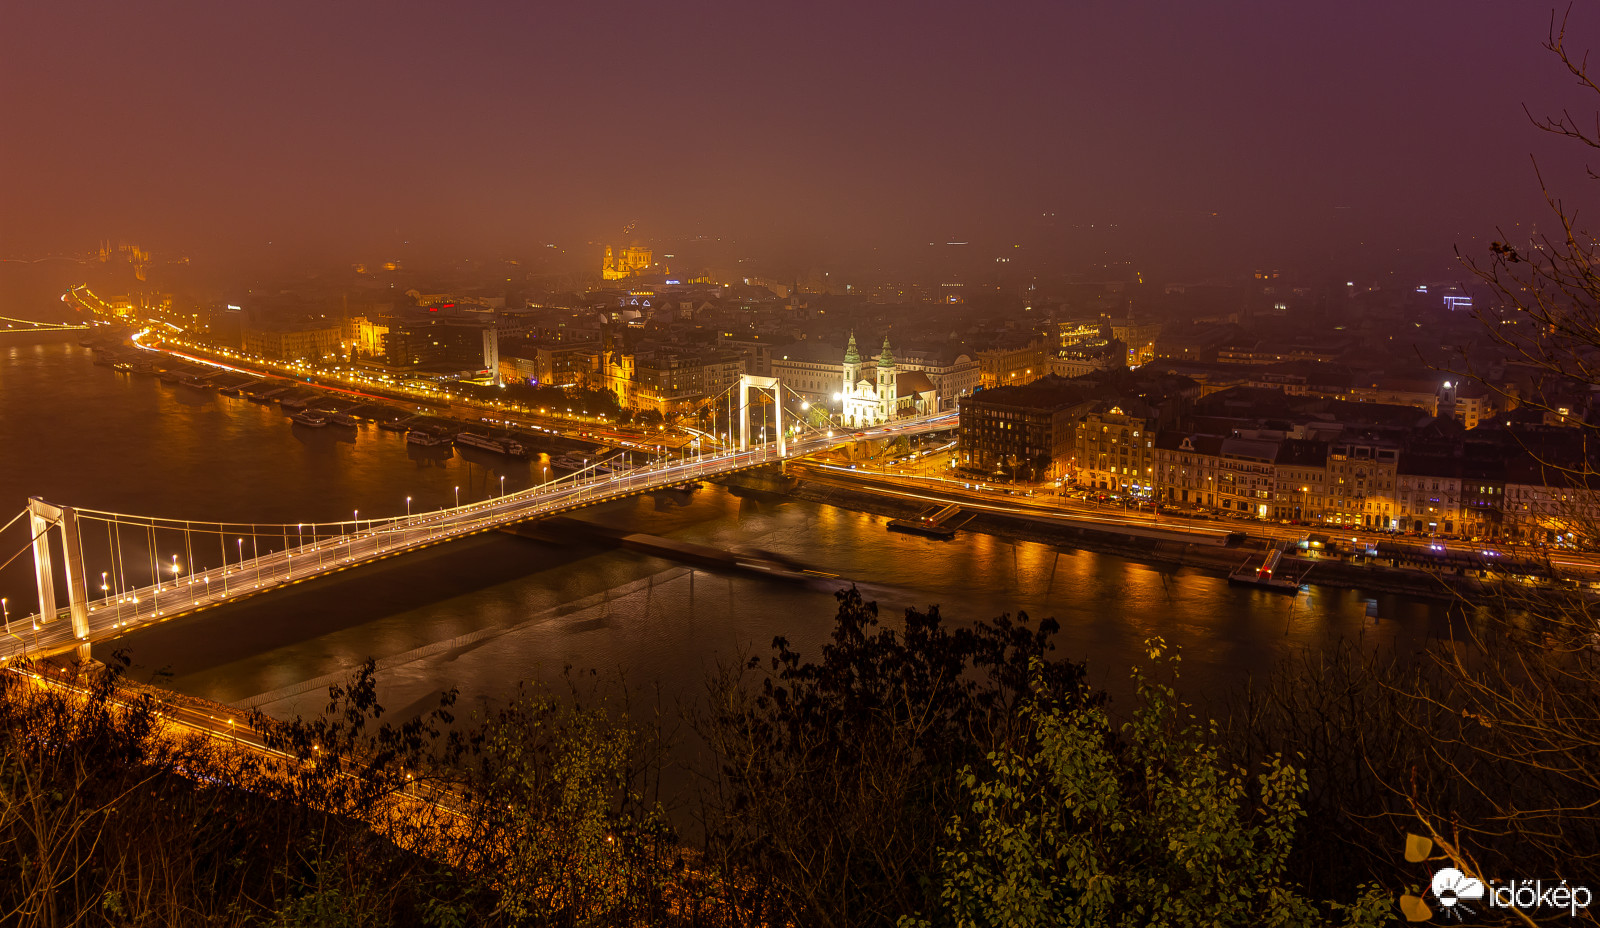 Ködös Budapest